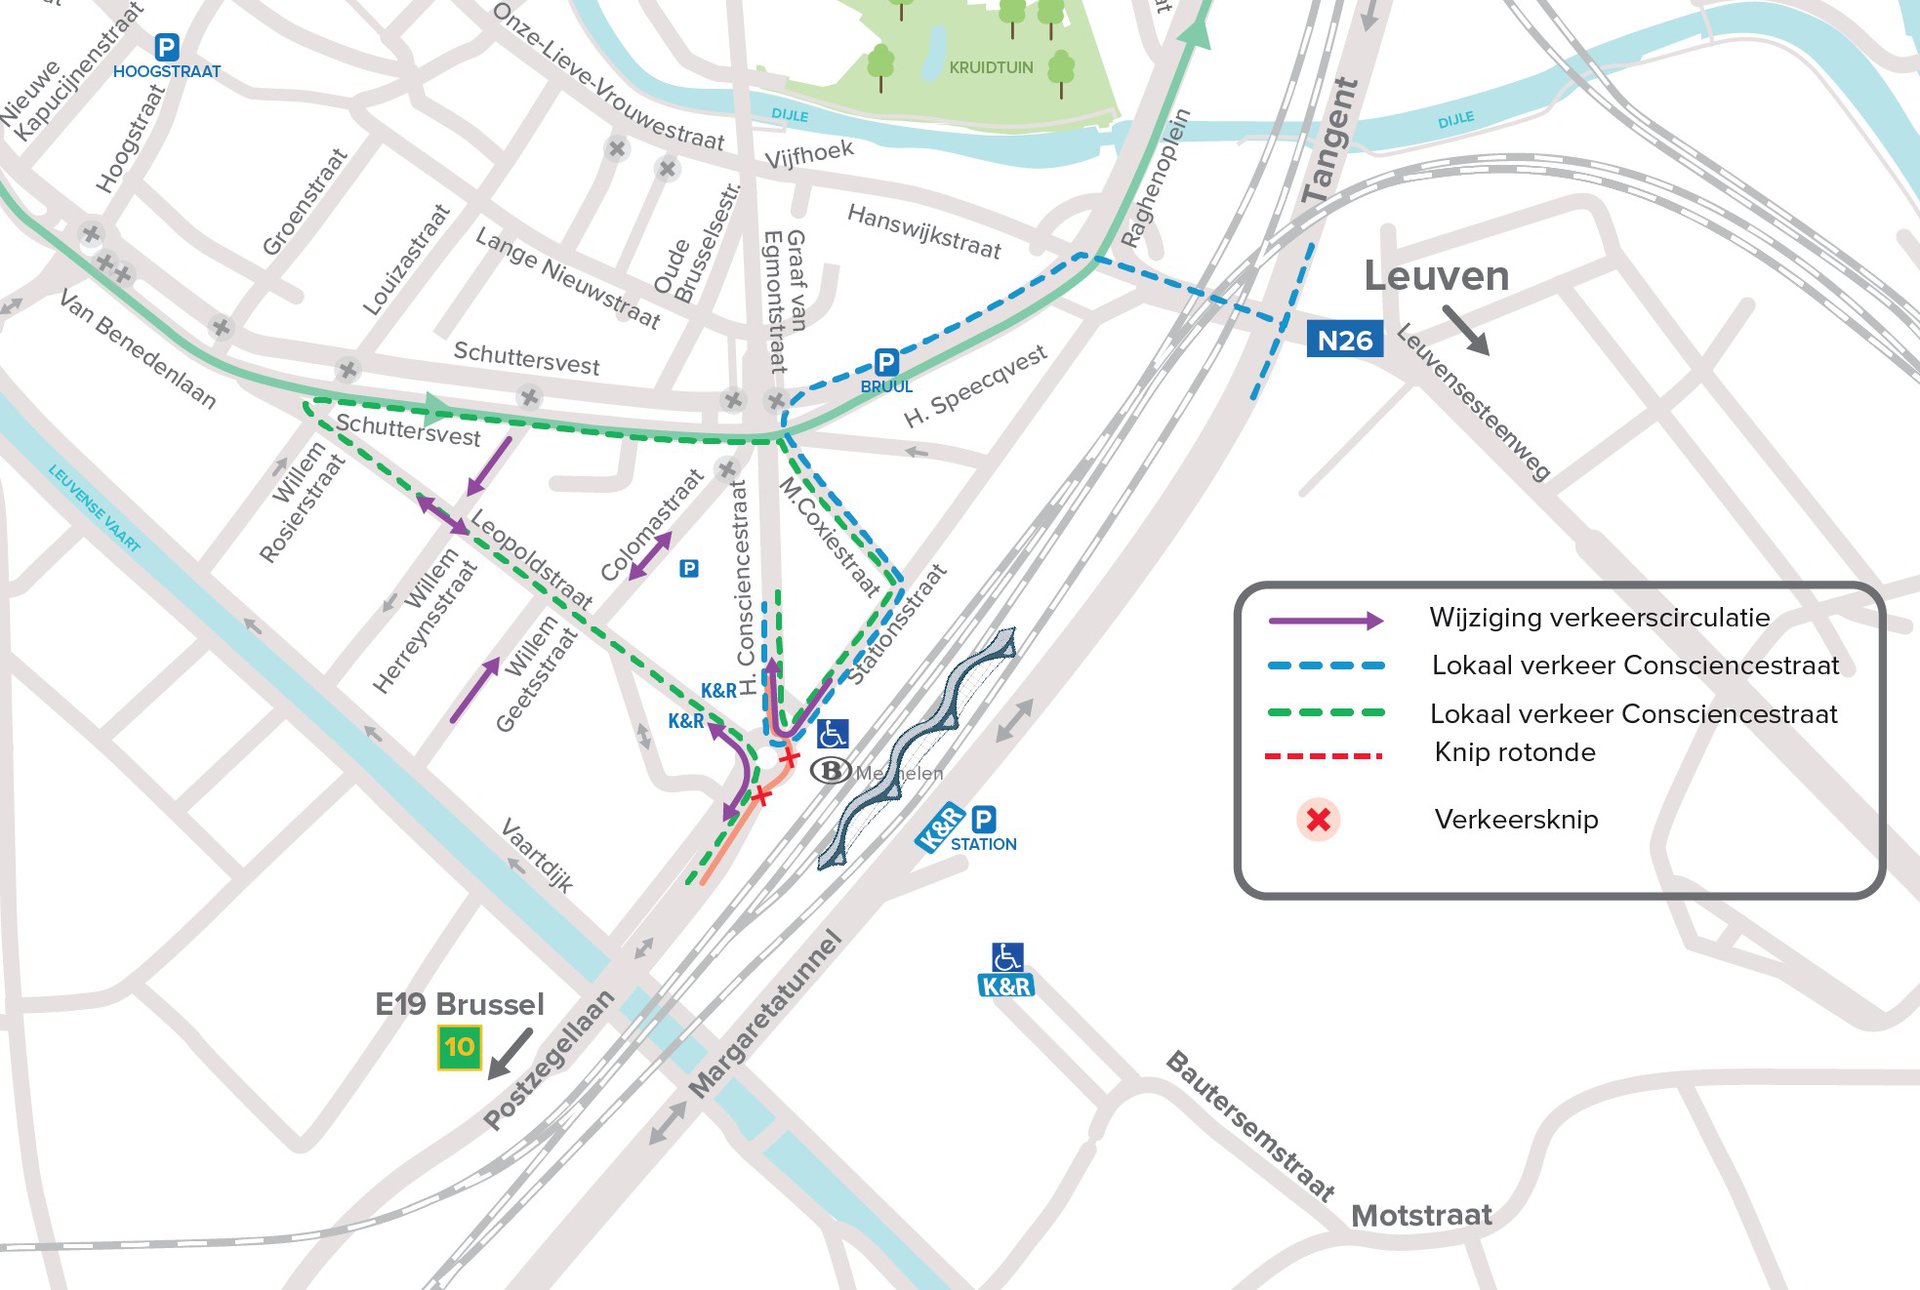 Plan bereikbaarheid station Mechelen per auto